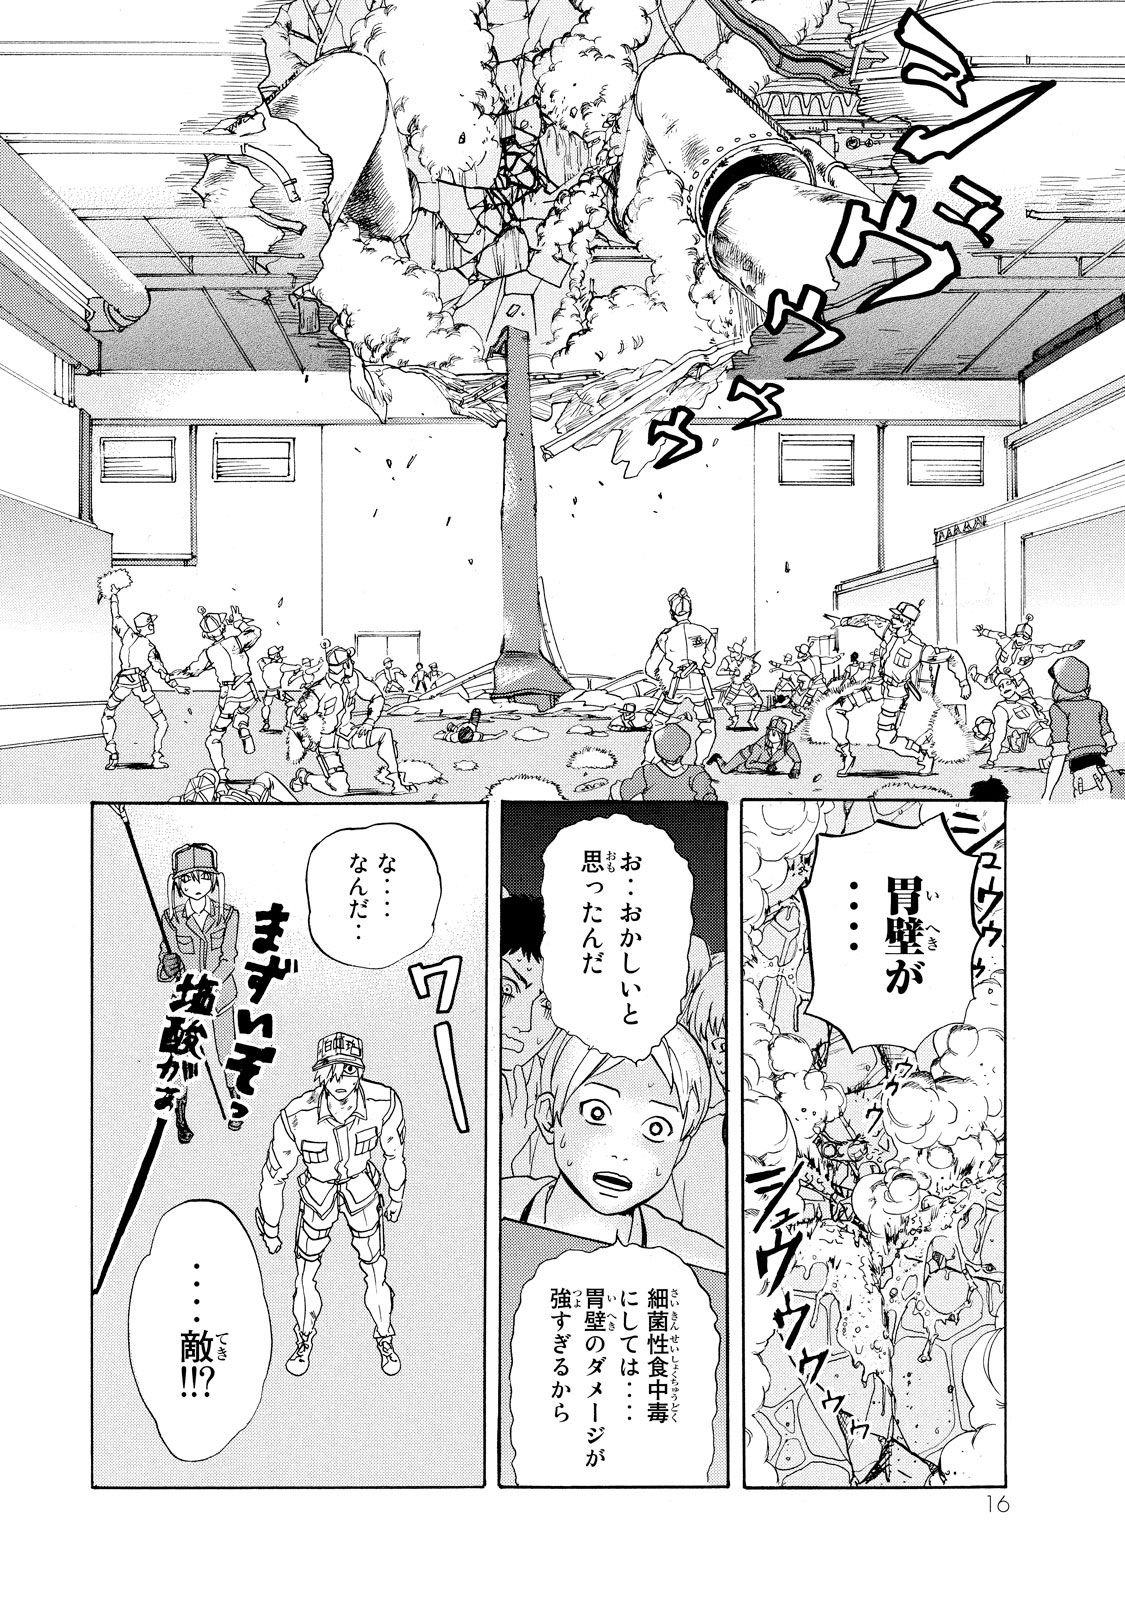 Hataraku Saibou - Chapter 5 - Page 18